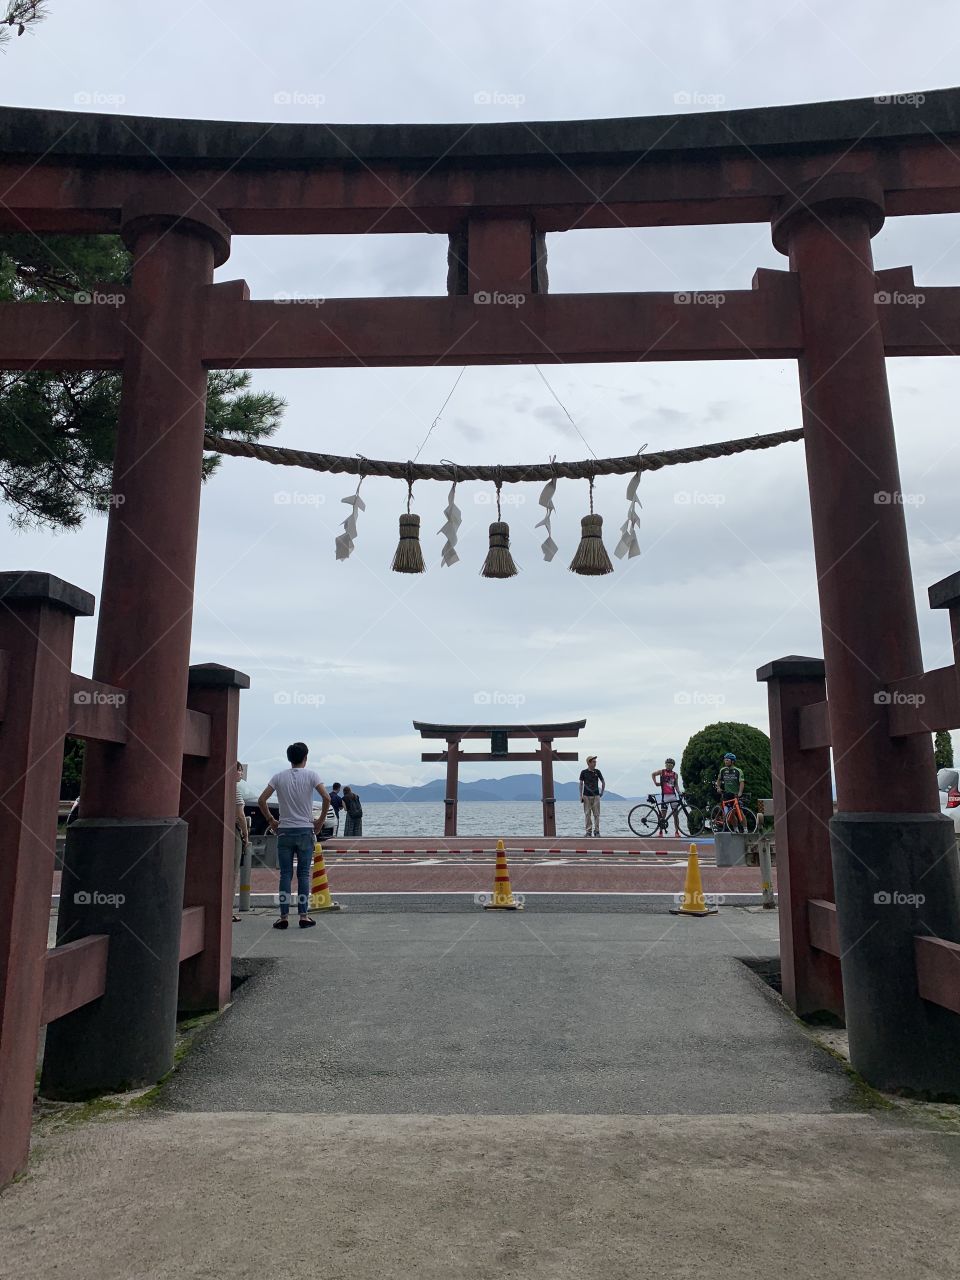 鳥居⛩ shrine gate